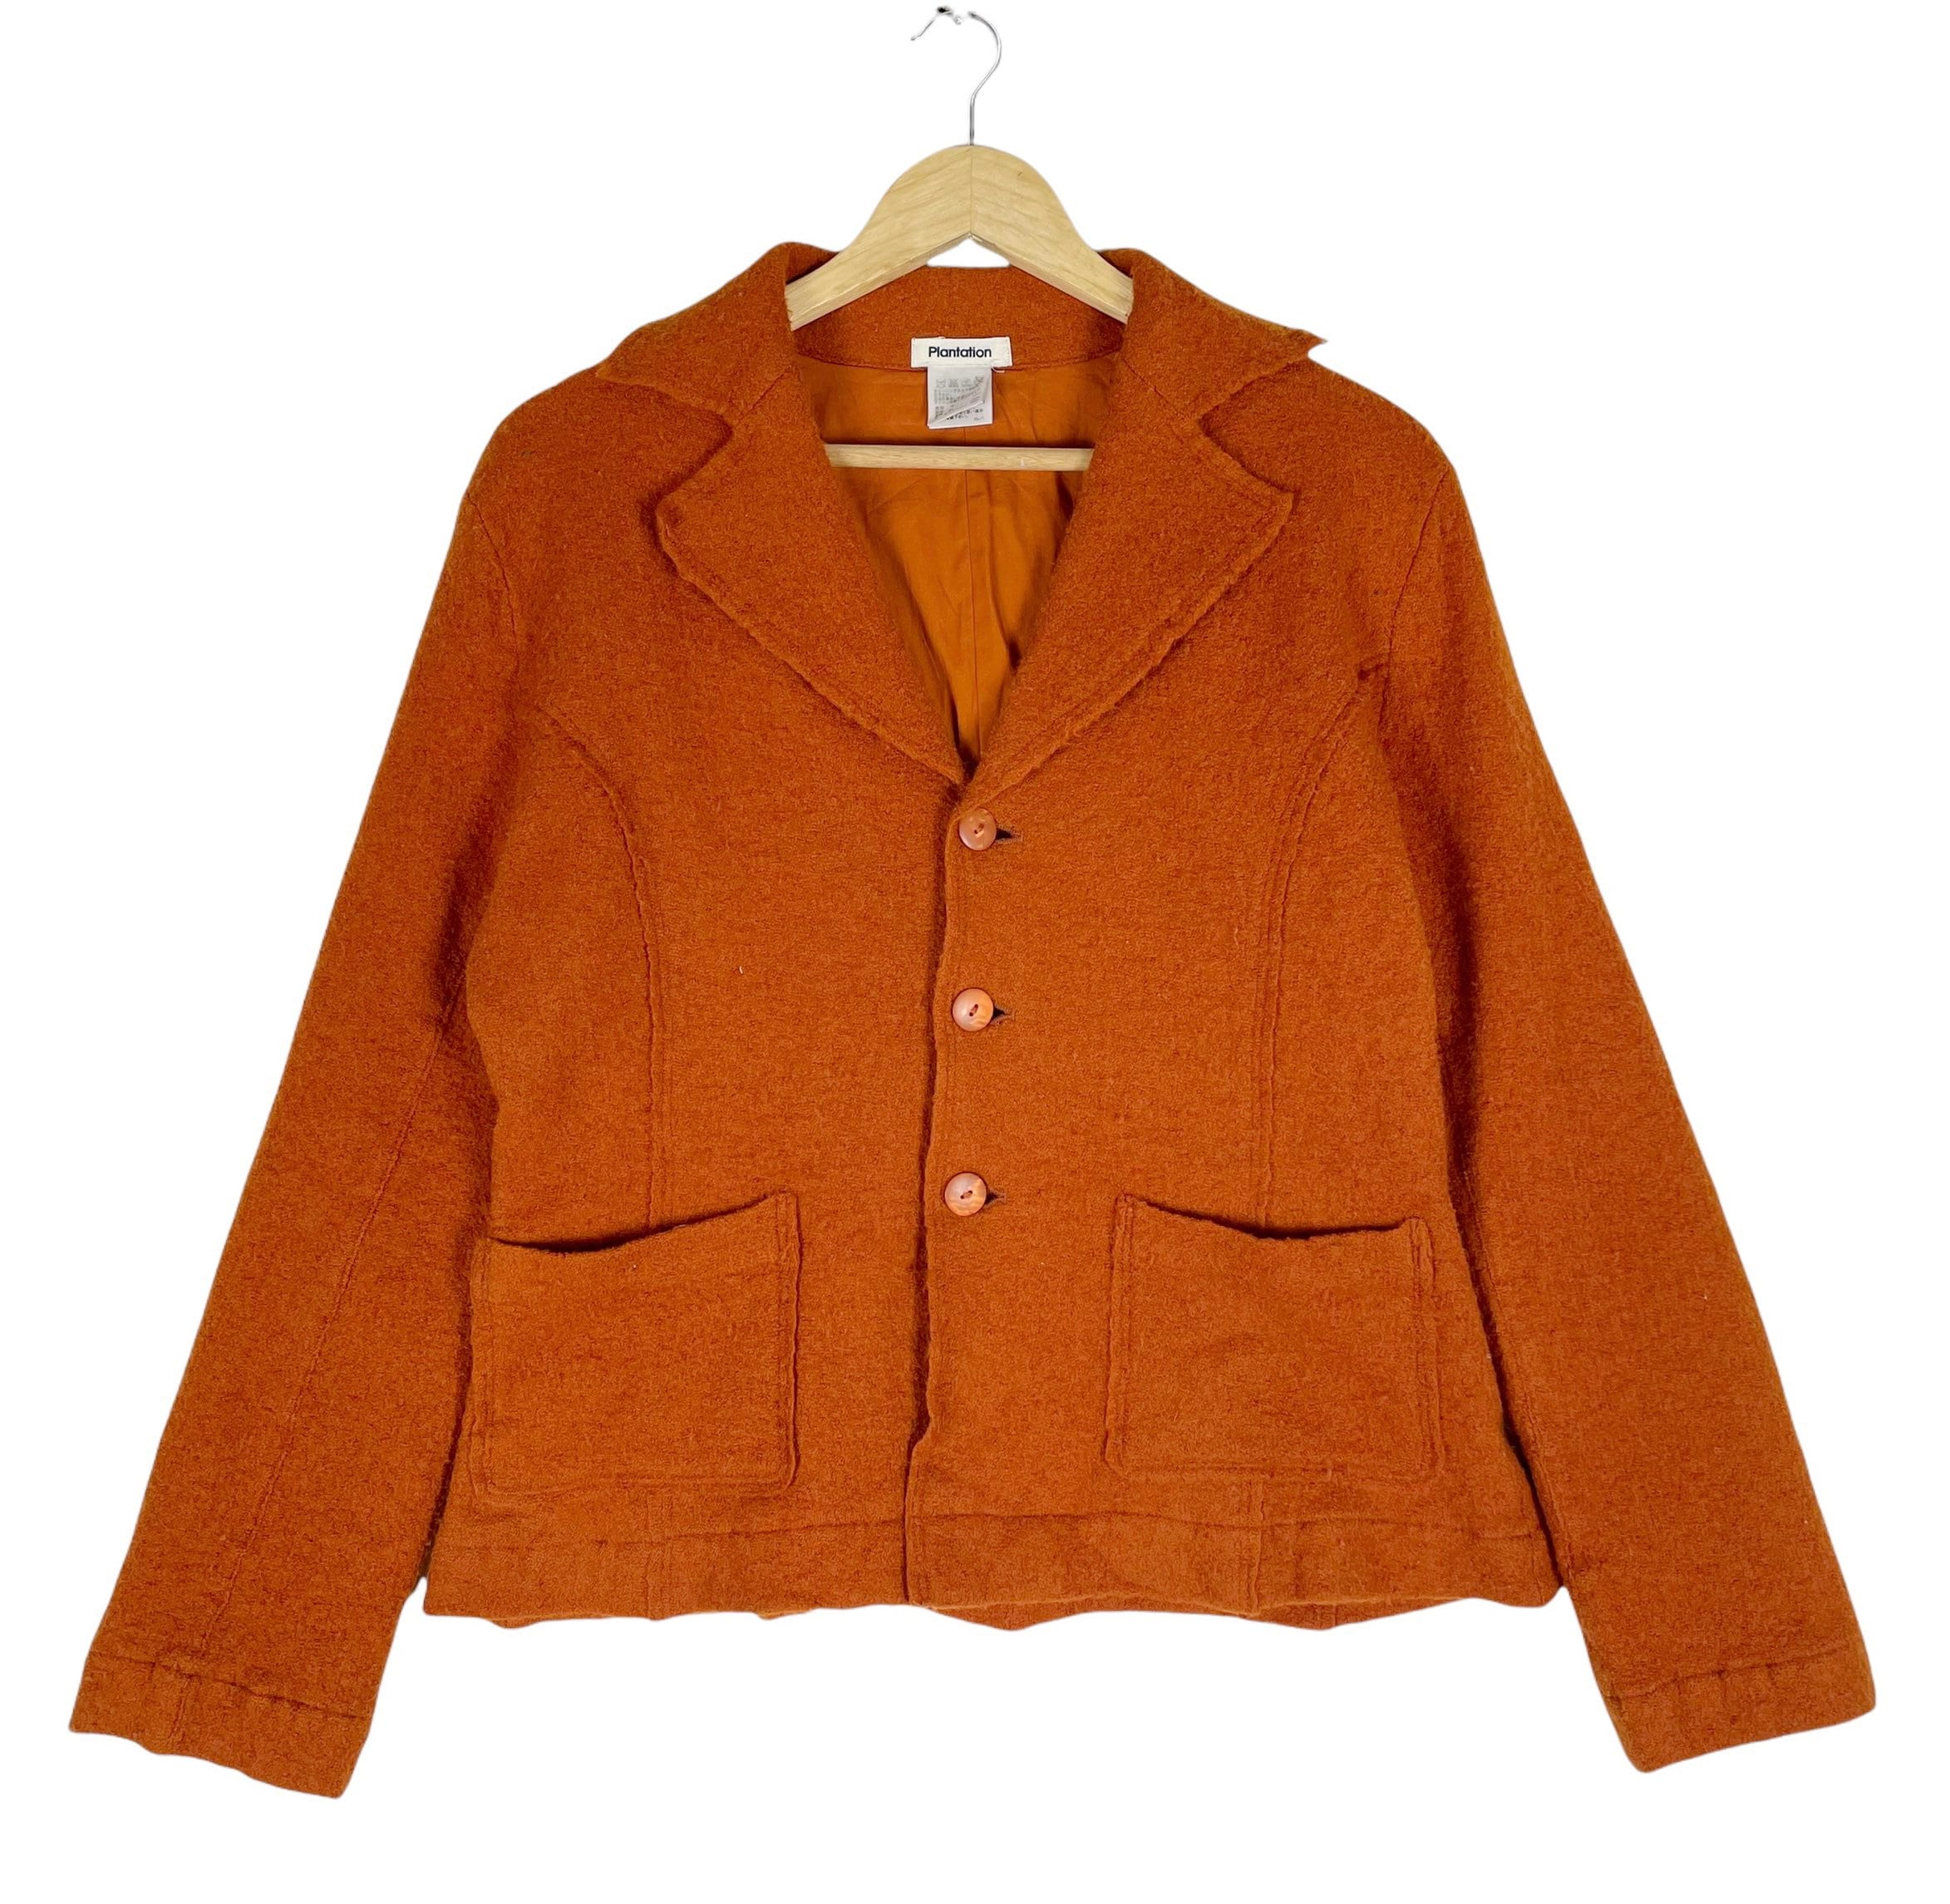 Vintage 90s Plantation Issey Miyake Jacket Button Fashion - Etsy 日本